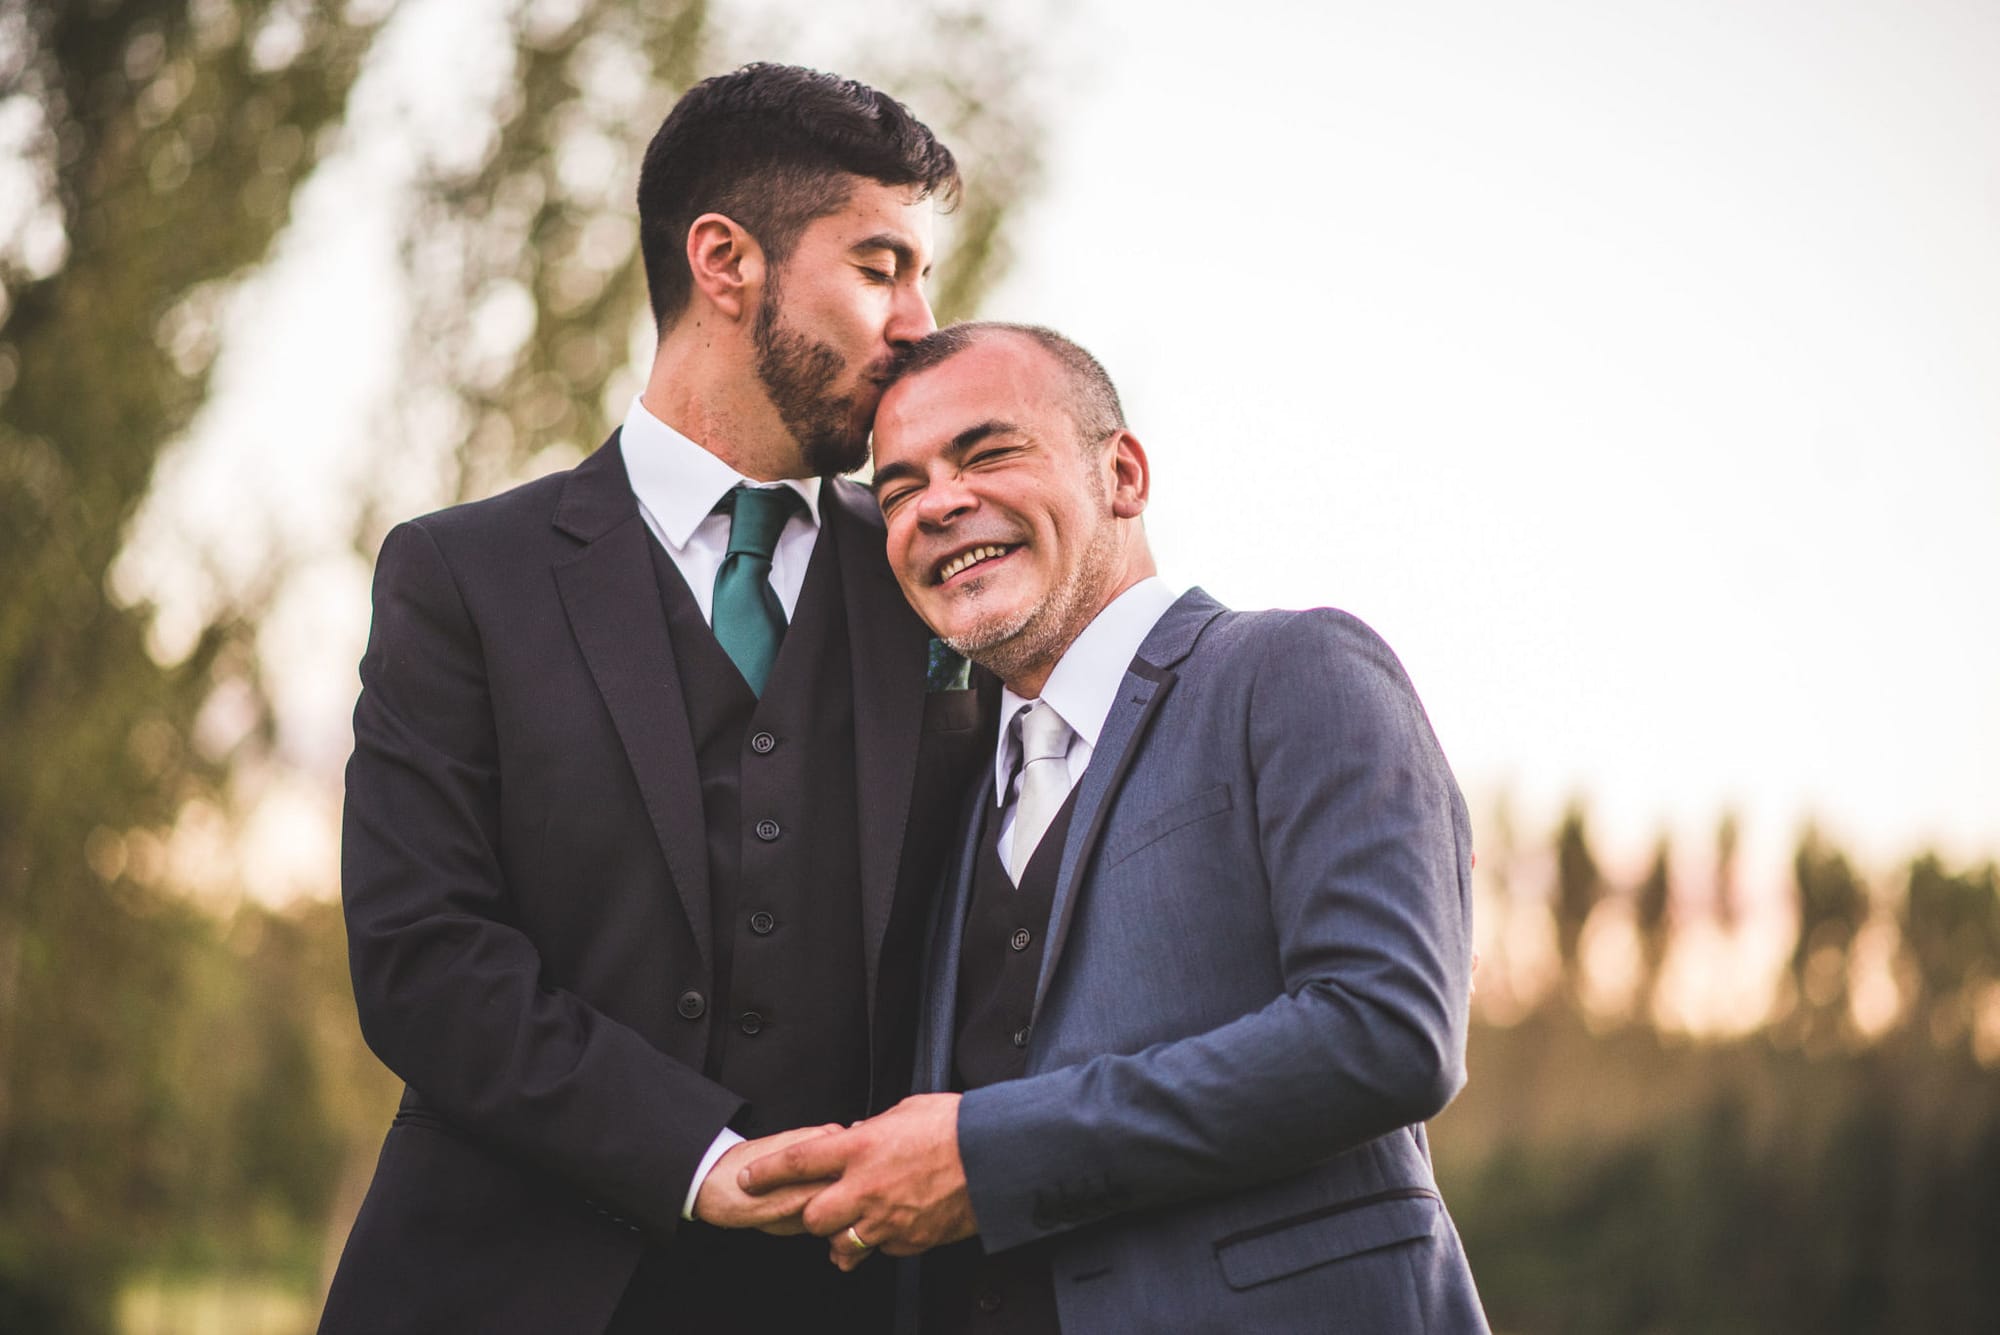 union civil-matrimonio igualitario-matrimonio gay-entre alamos y cachapoal